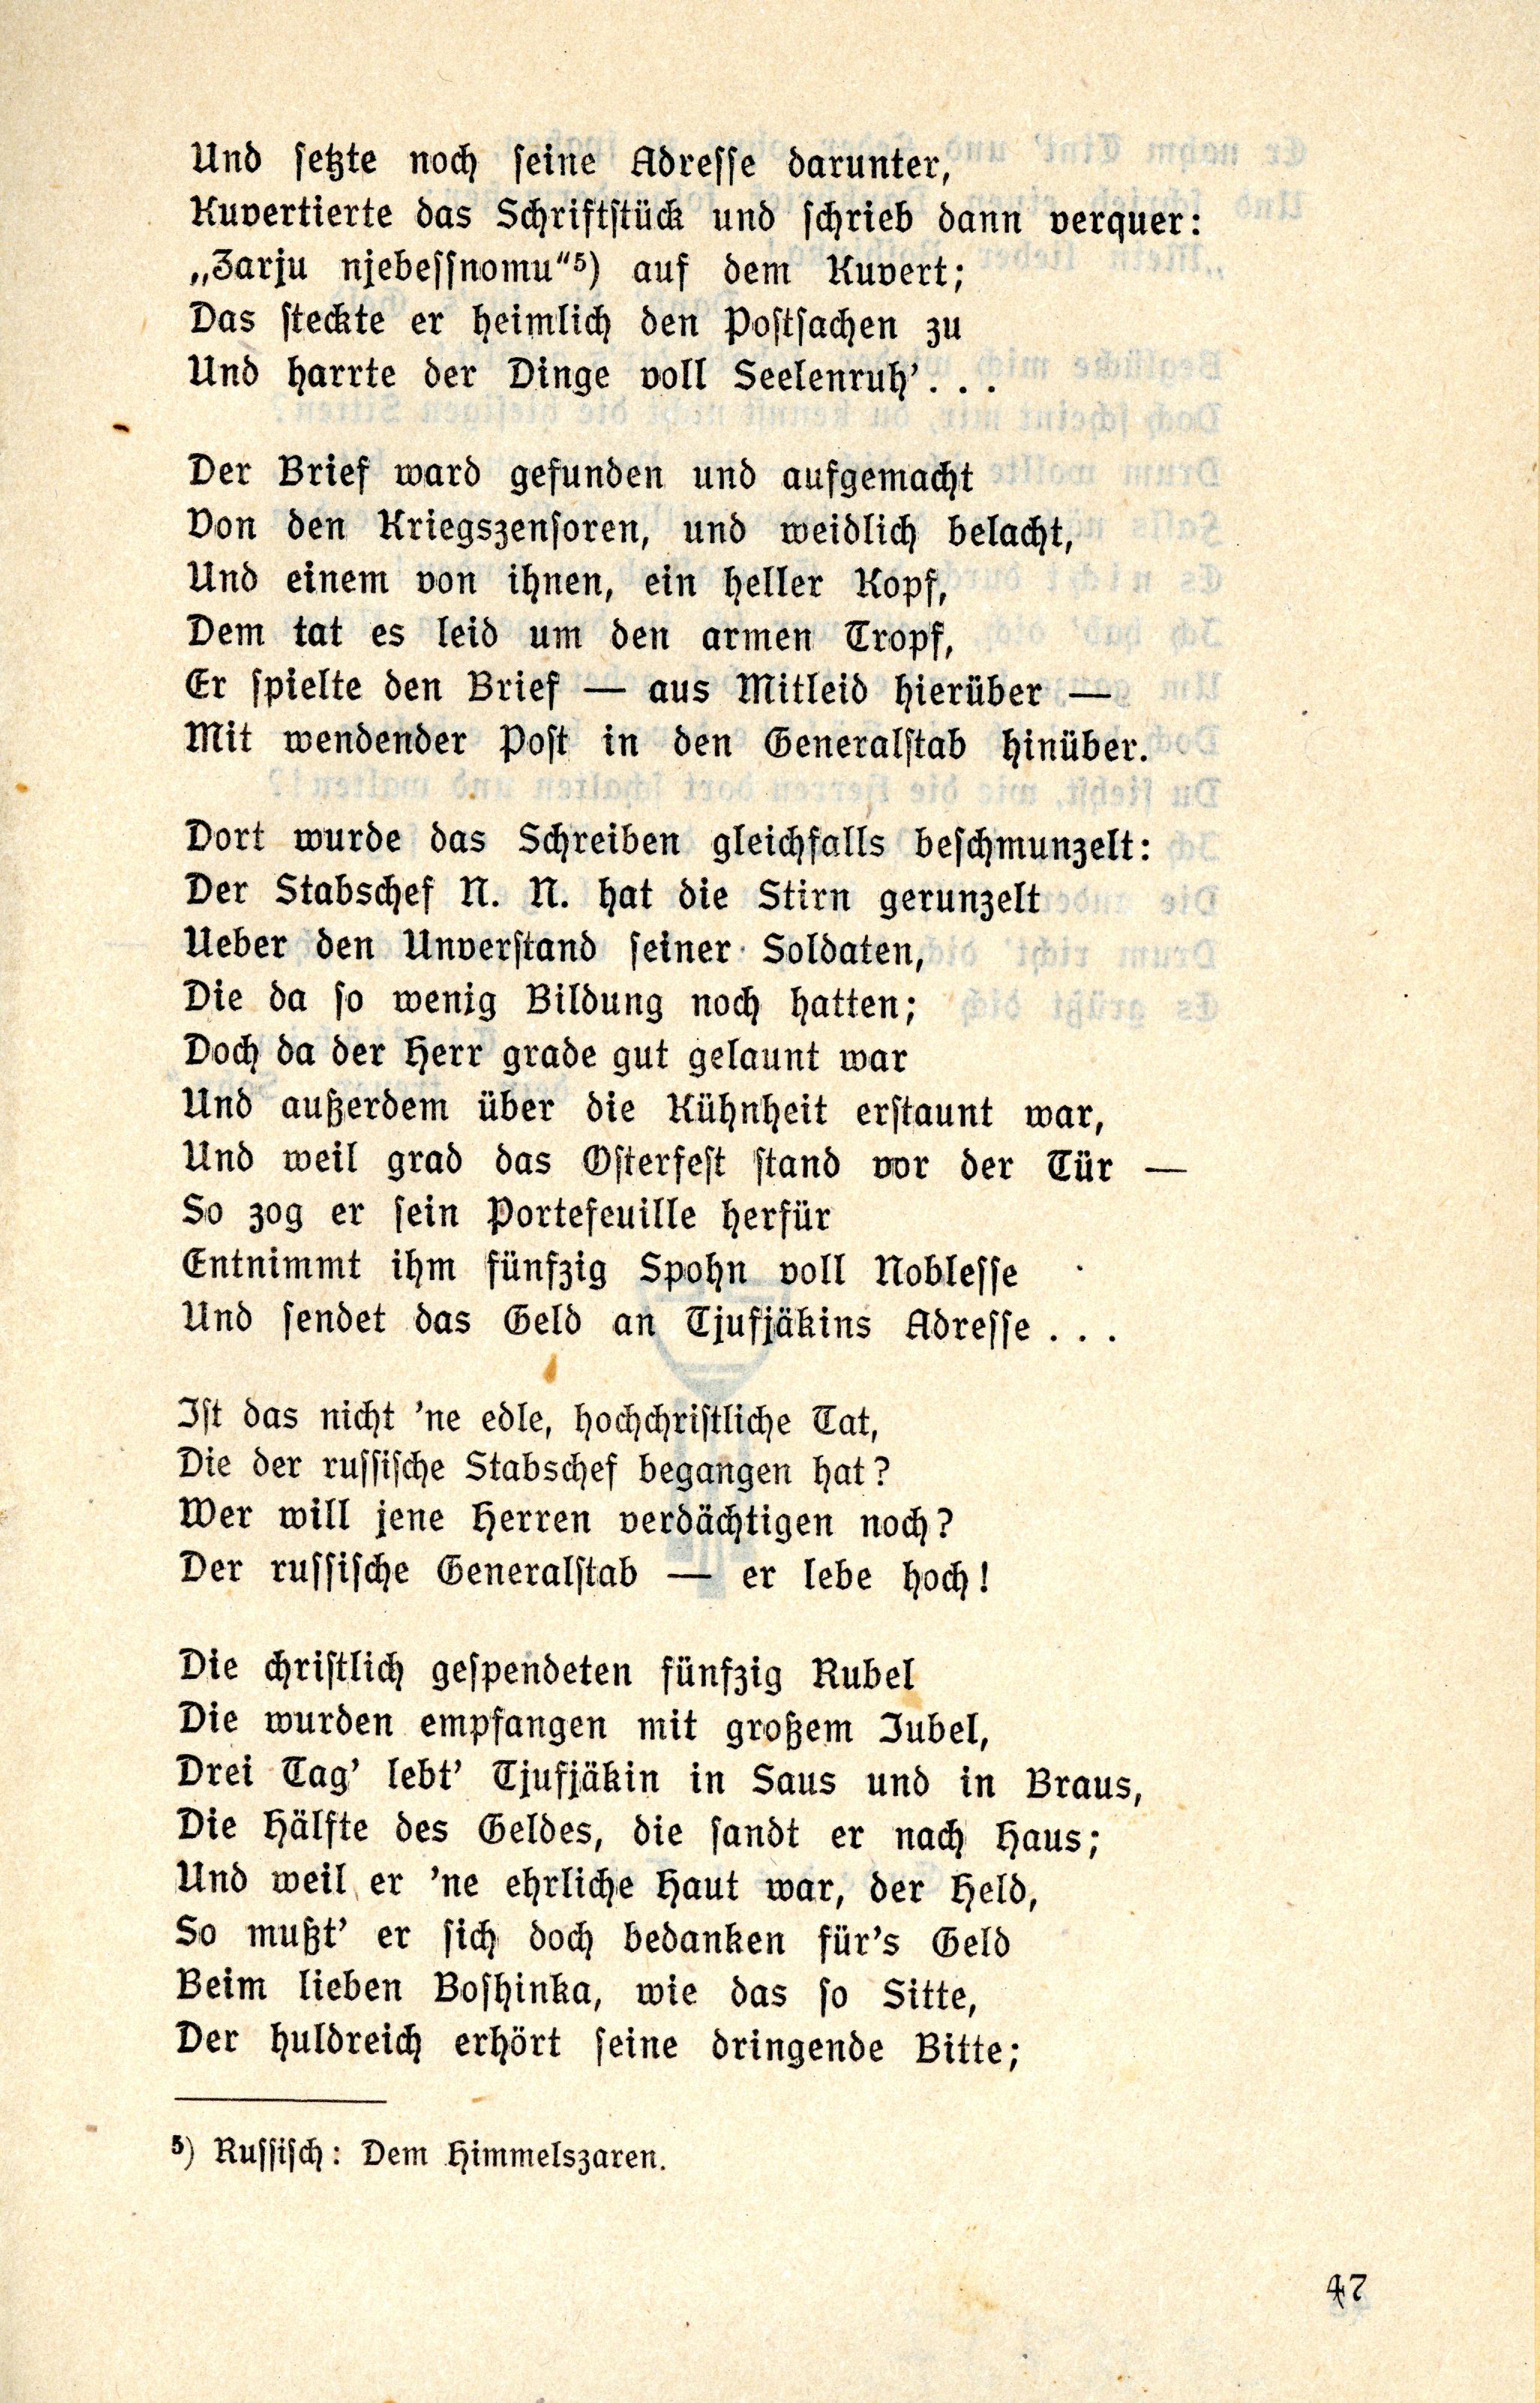 Der Balte im Maulkorb (1917) | 48. (47) Main body of text